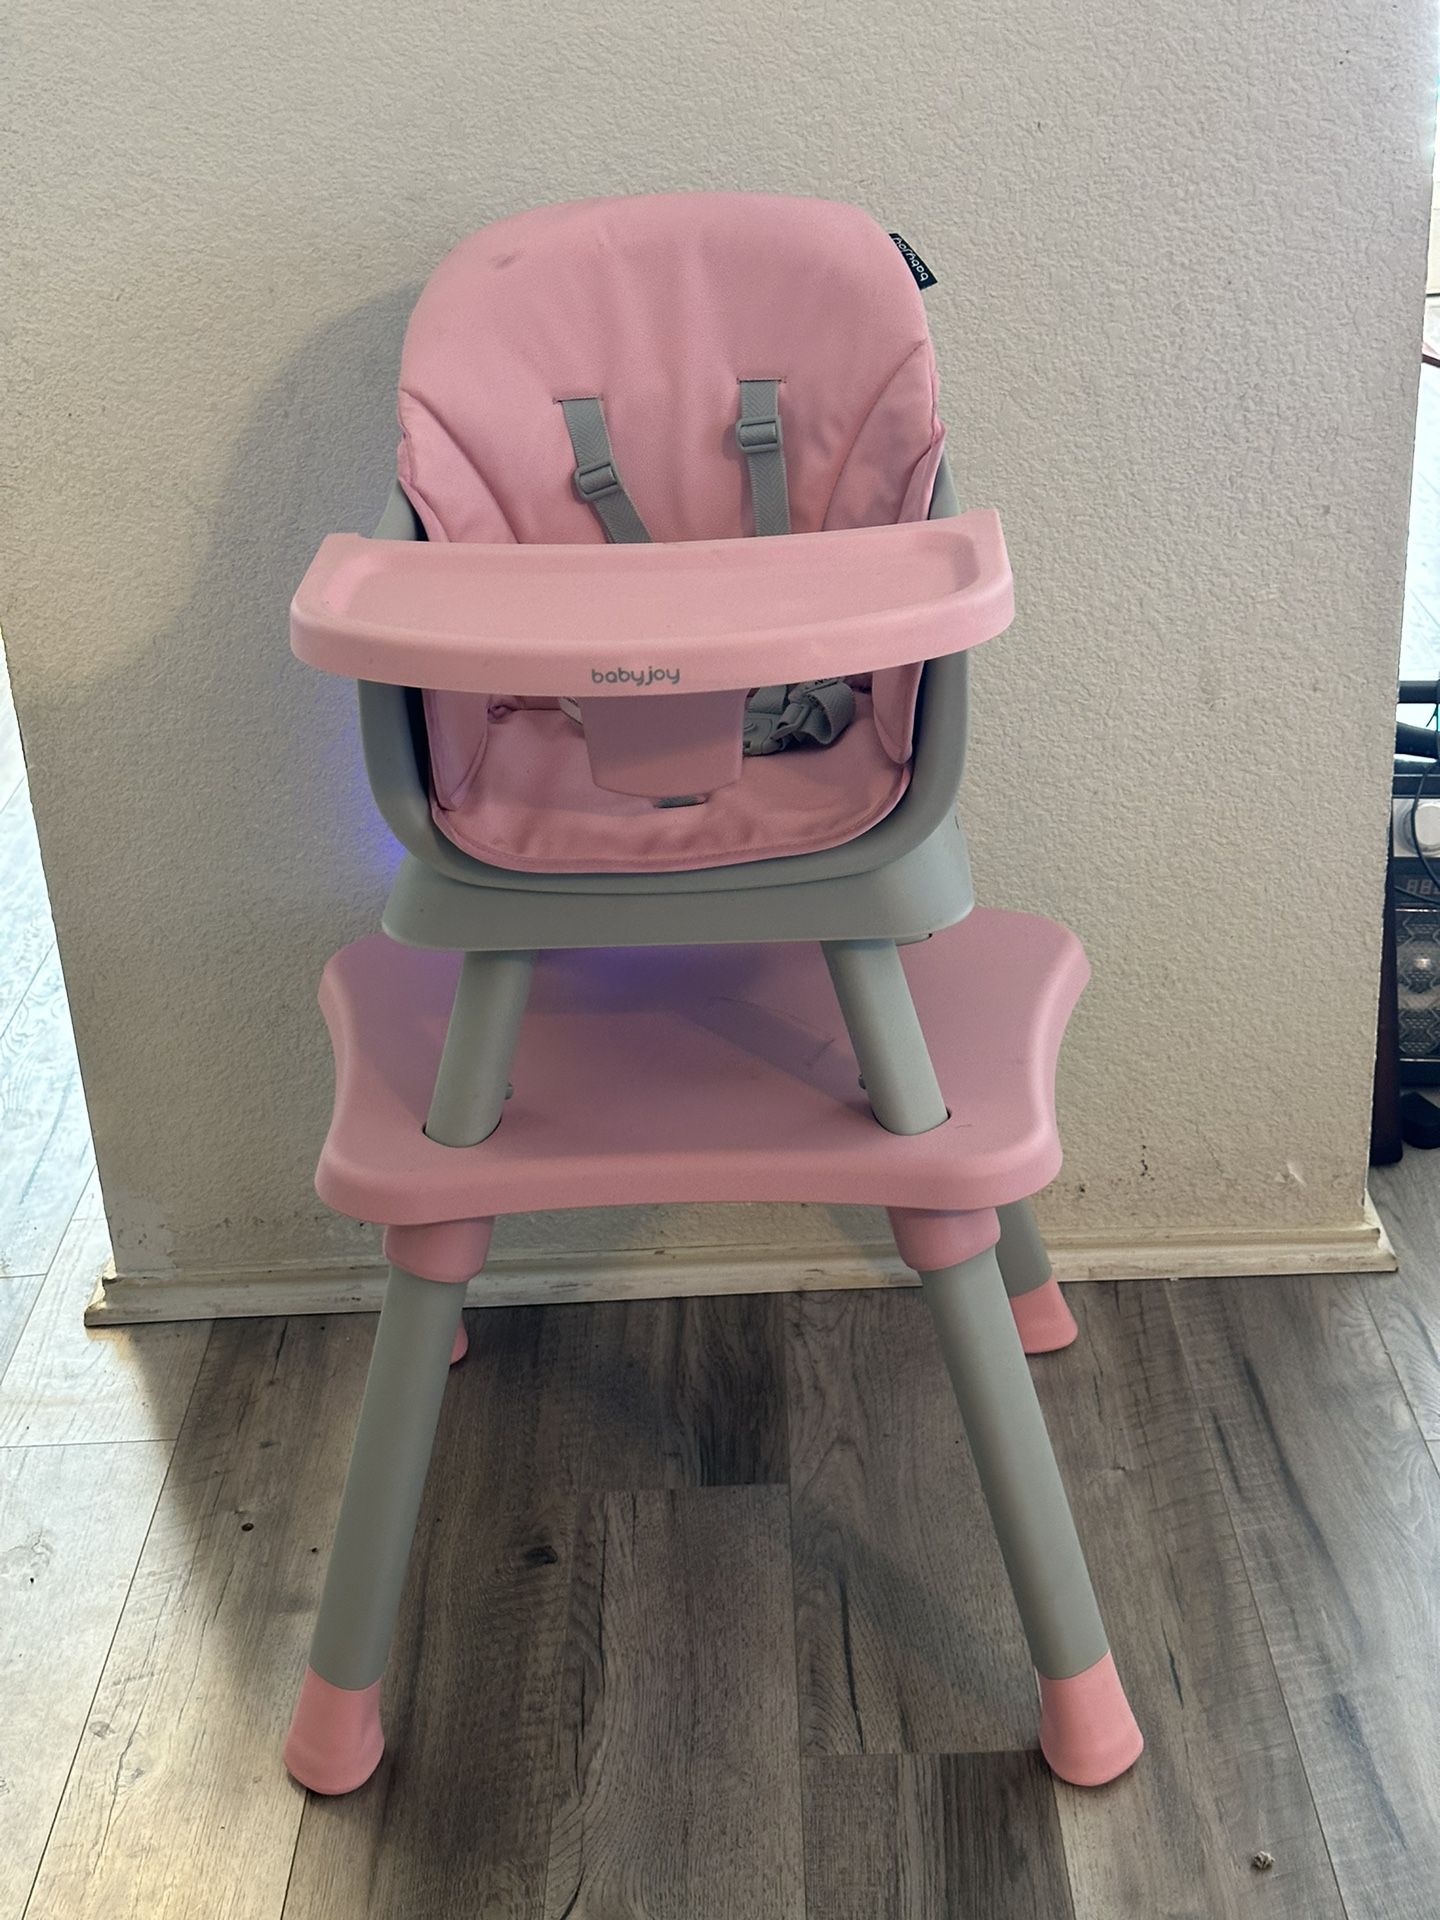 Babyjoy 8 in 1 Convertible High Chair